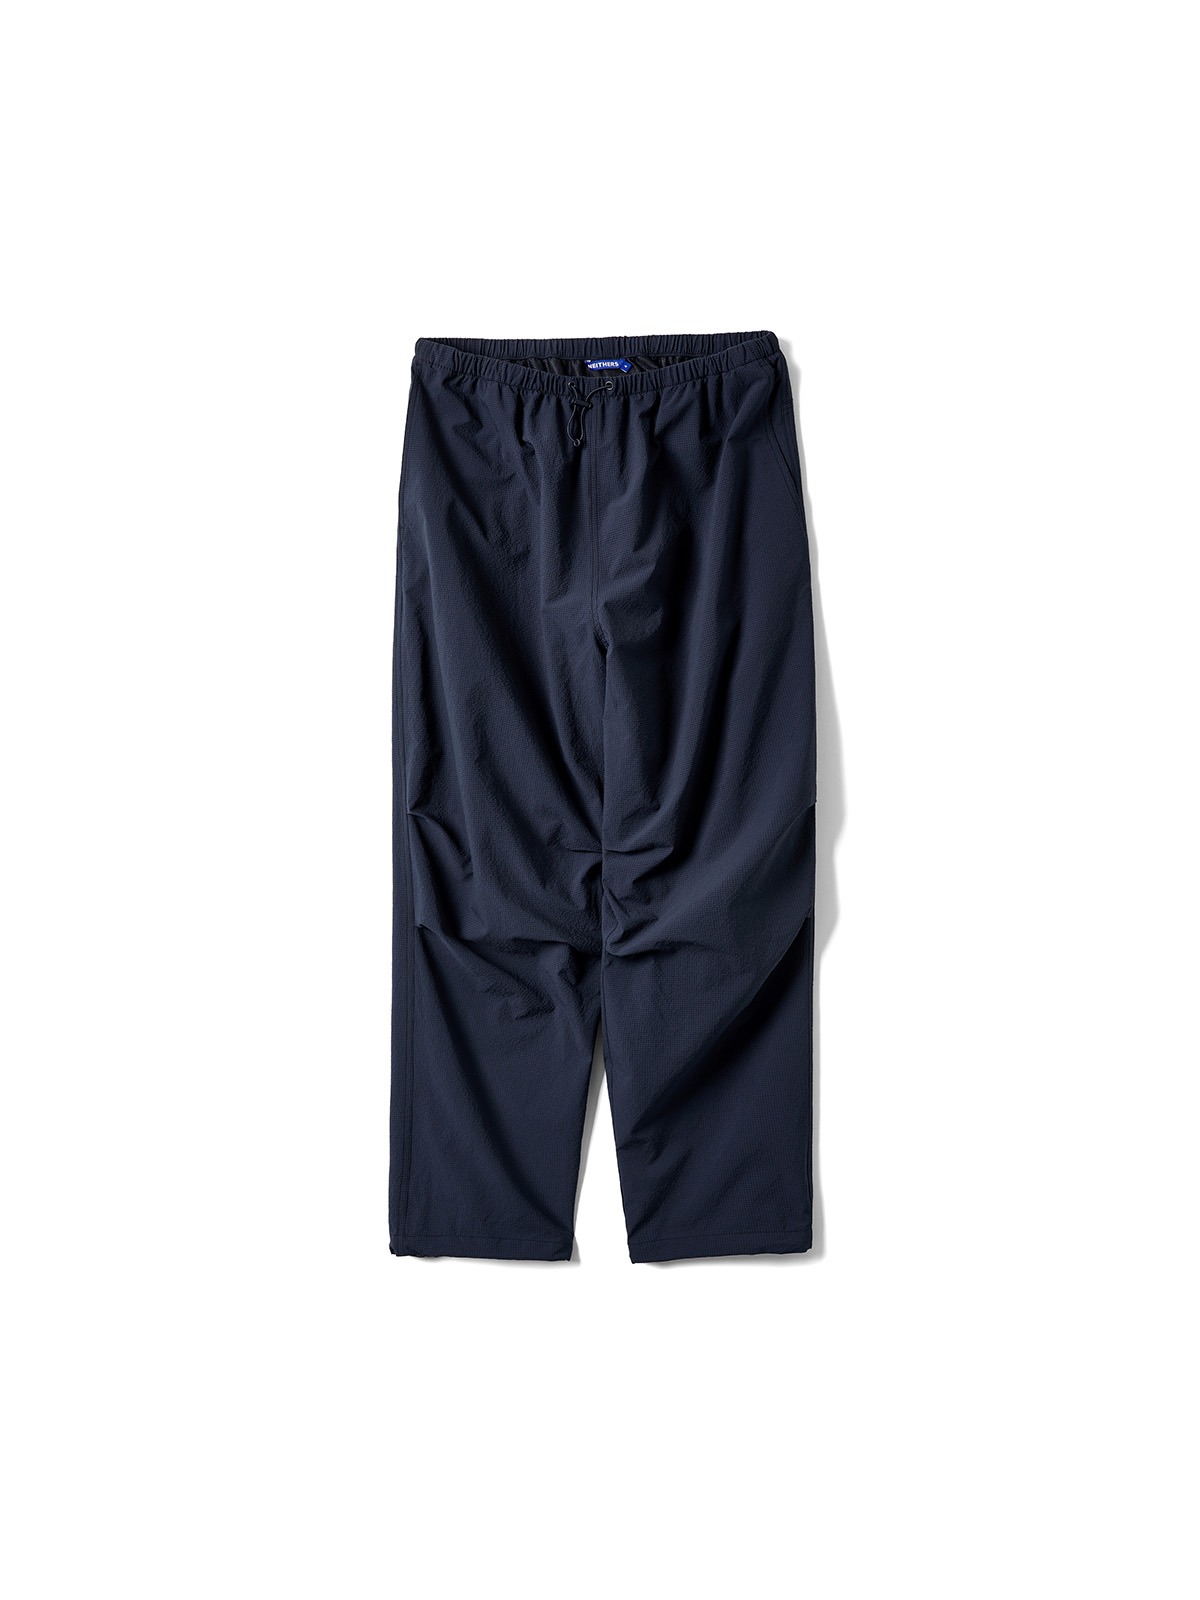 Camper Pants (Dark Navy)